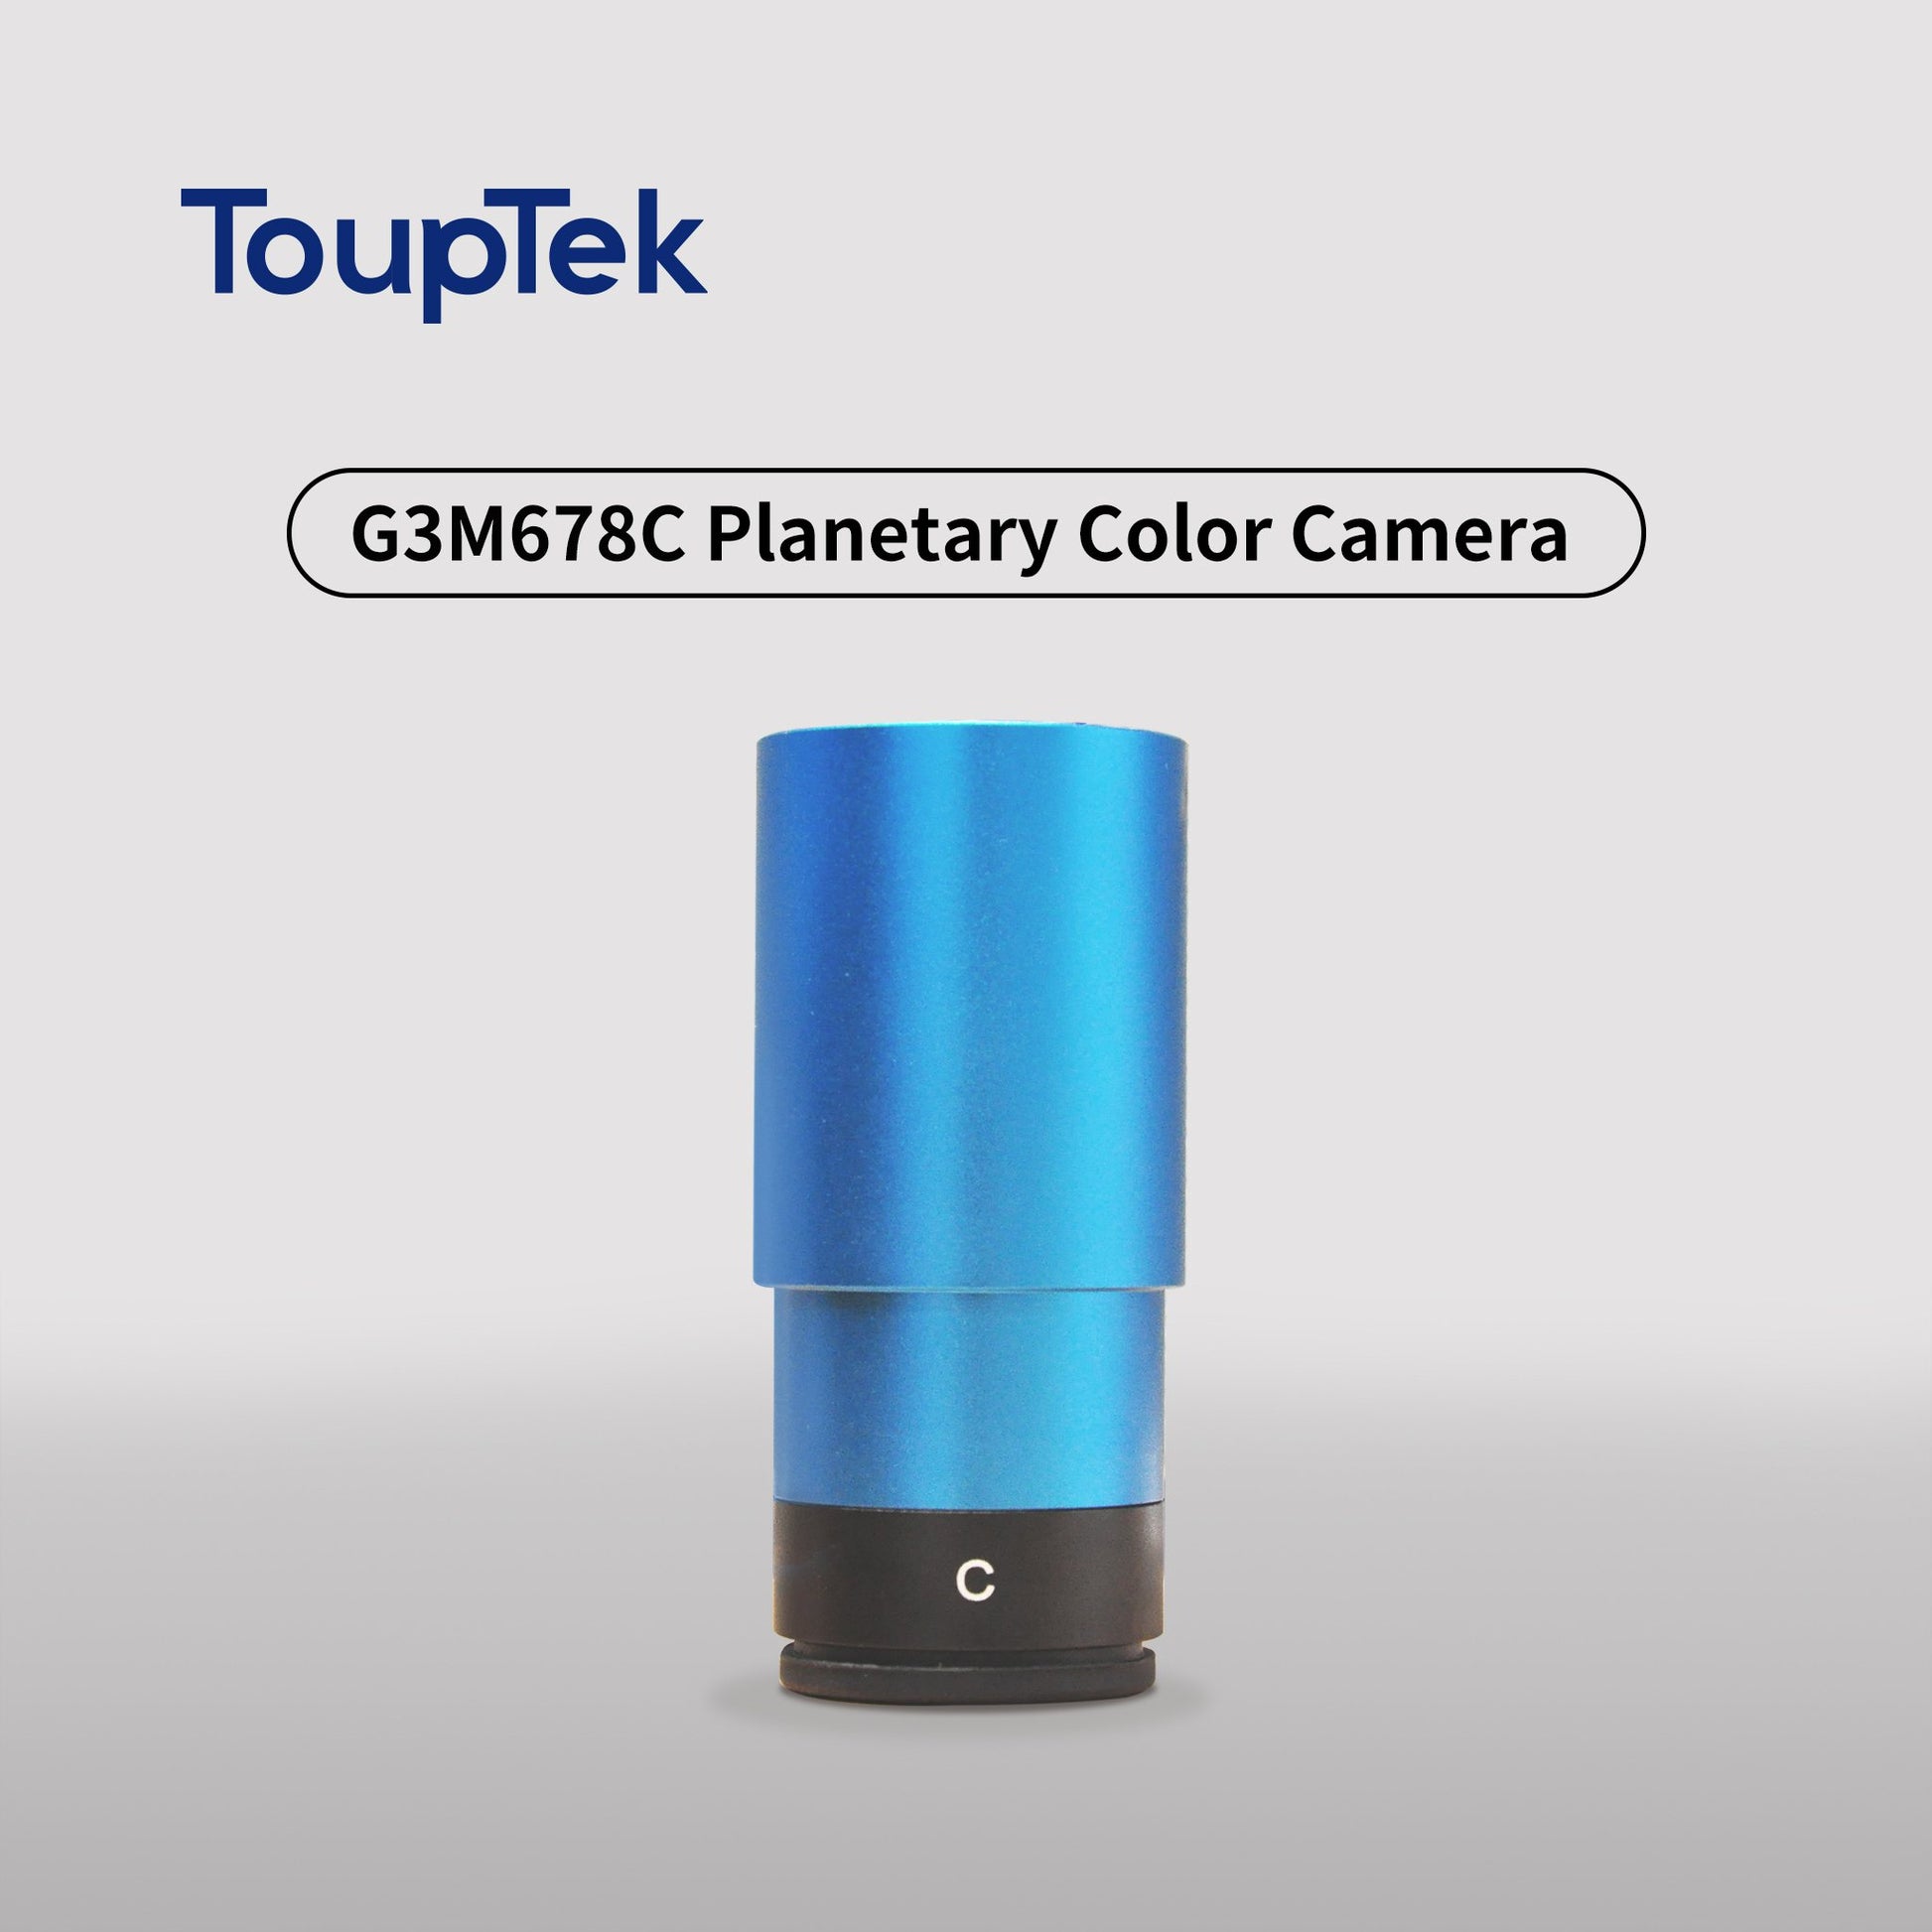 G3M678C Planetary Color Camera